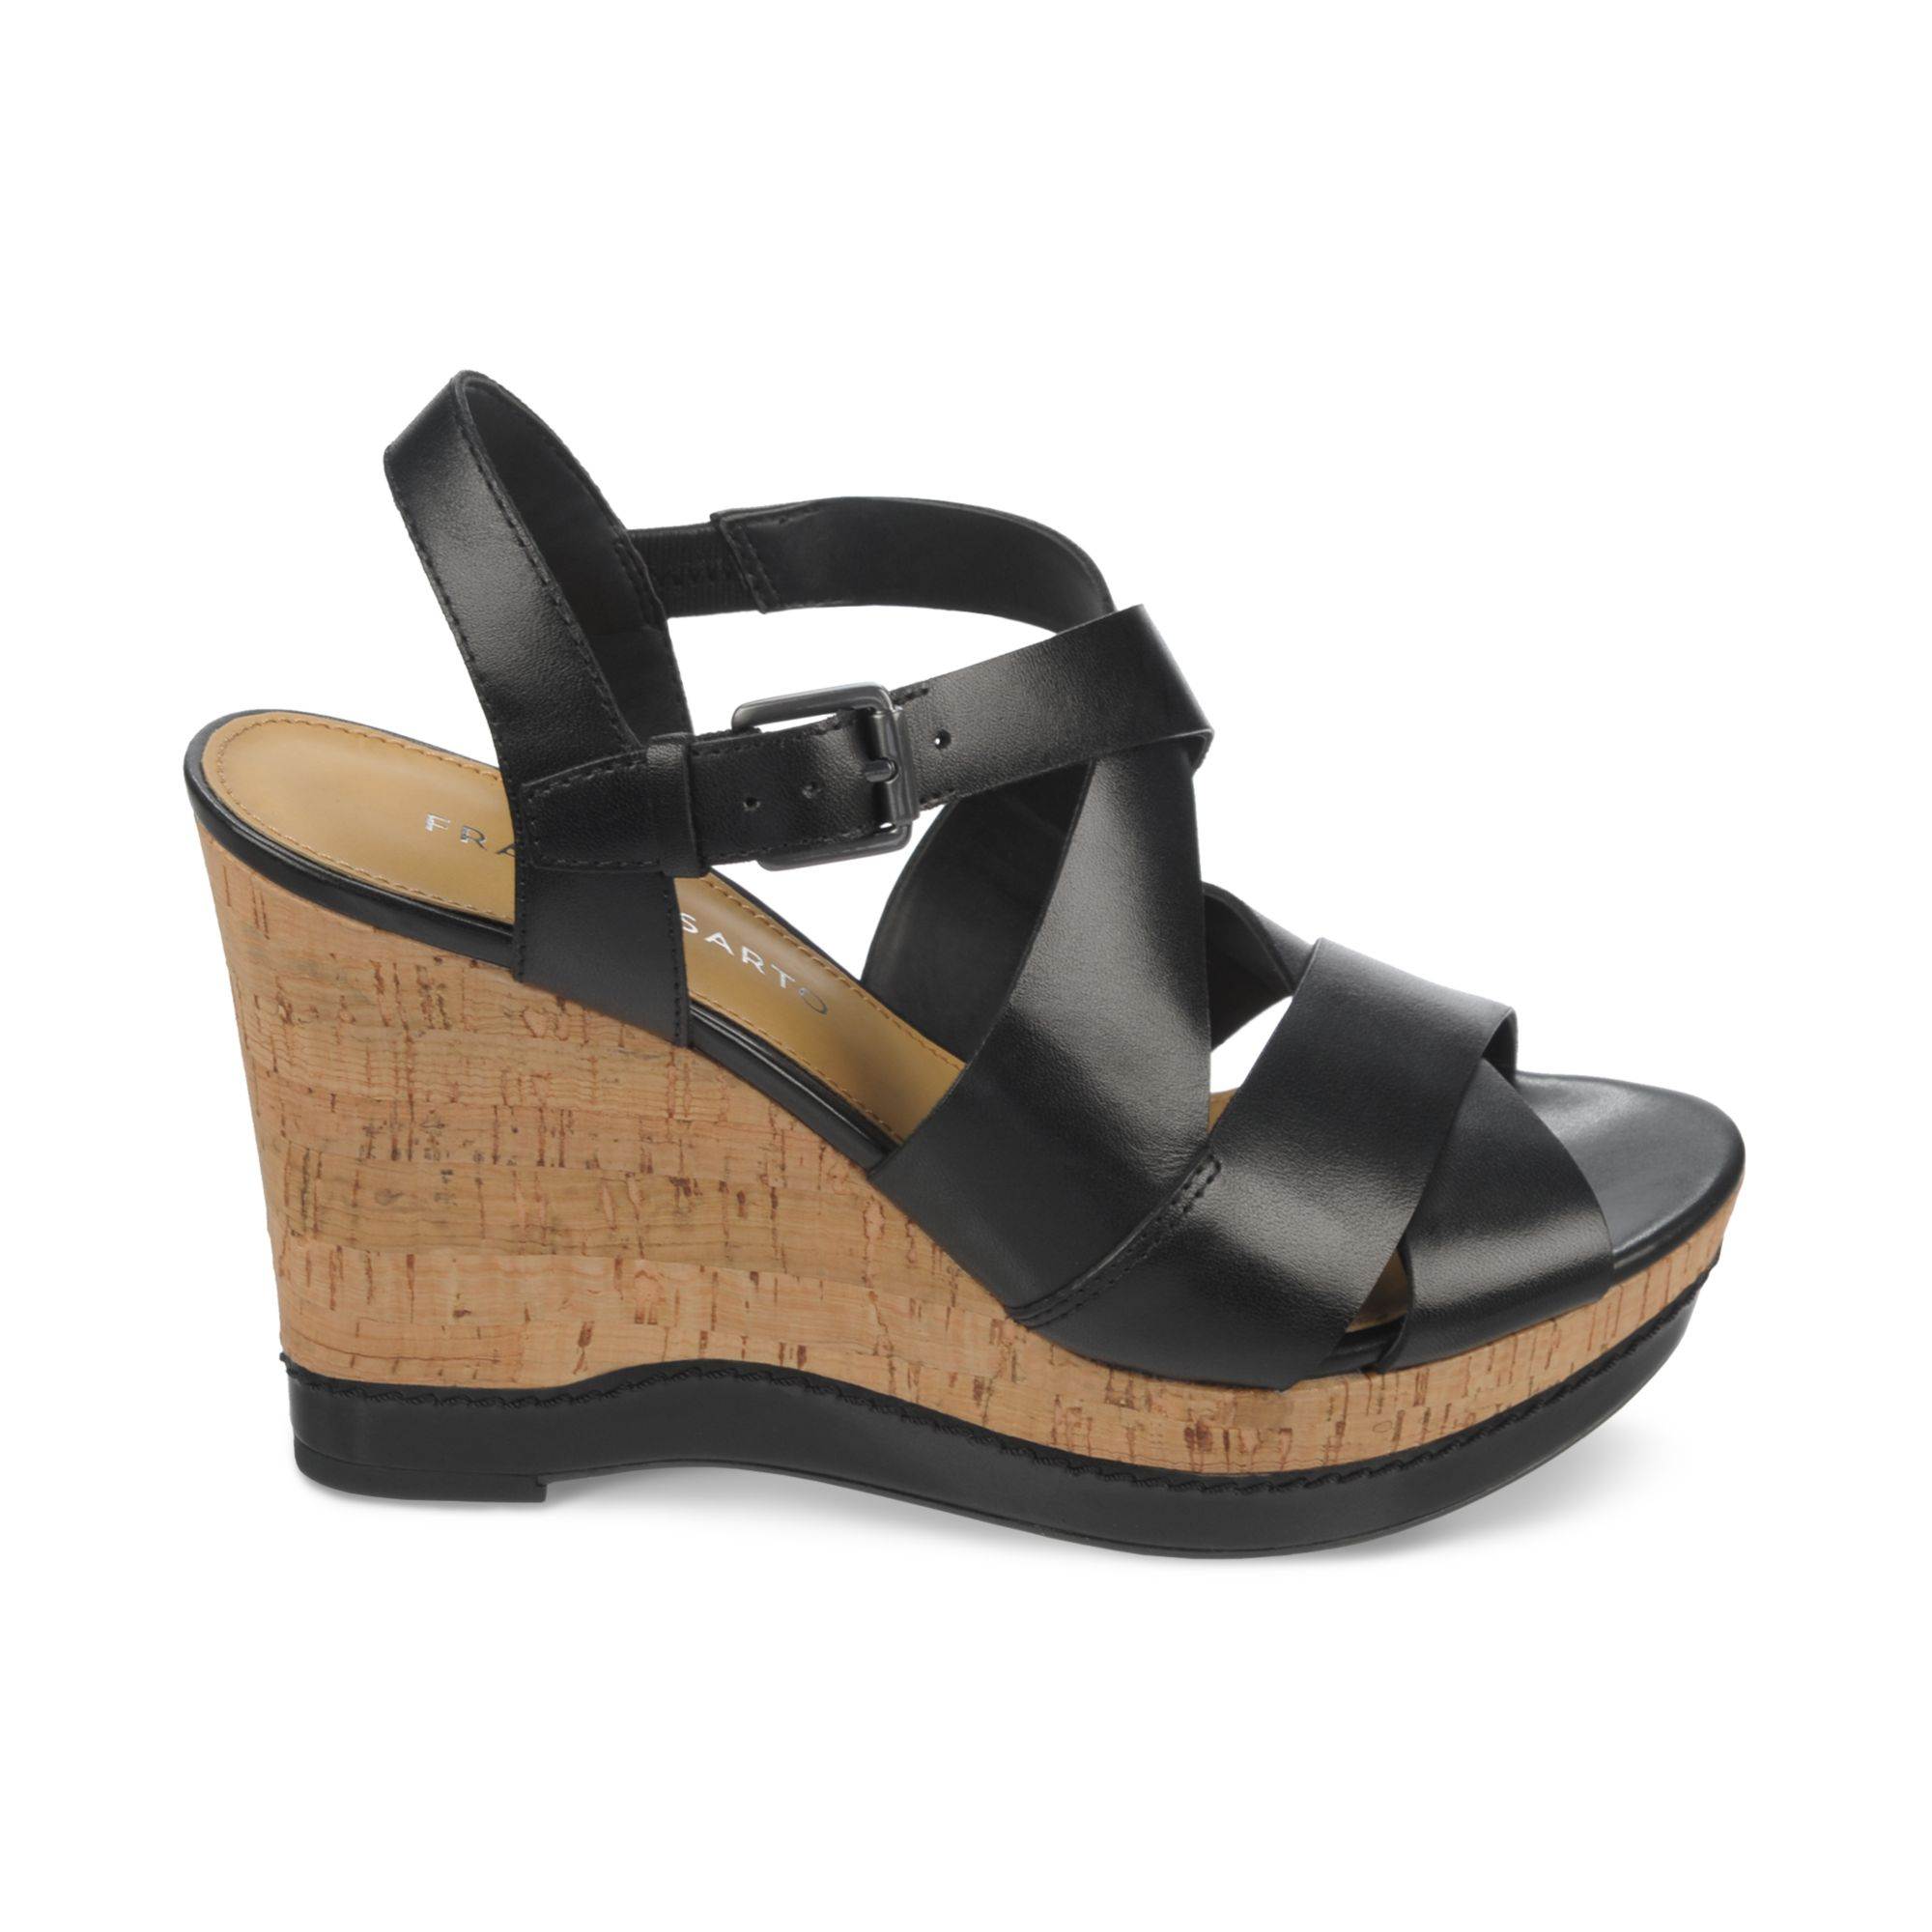 Franco Sarto Shiver Platform Wedge Sandals in Black - Lyst